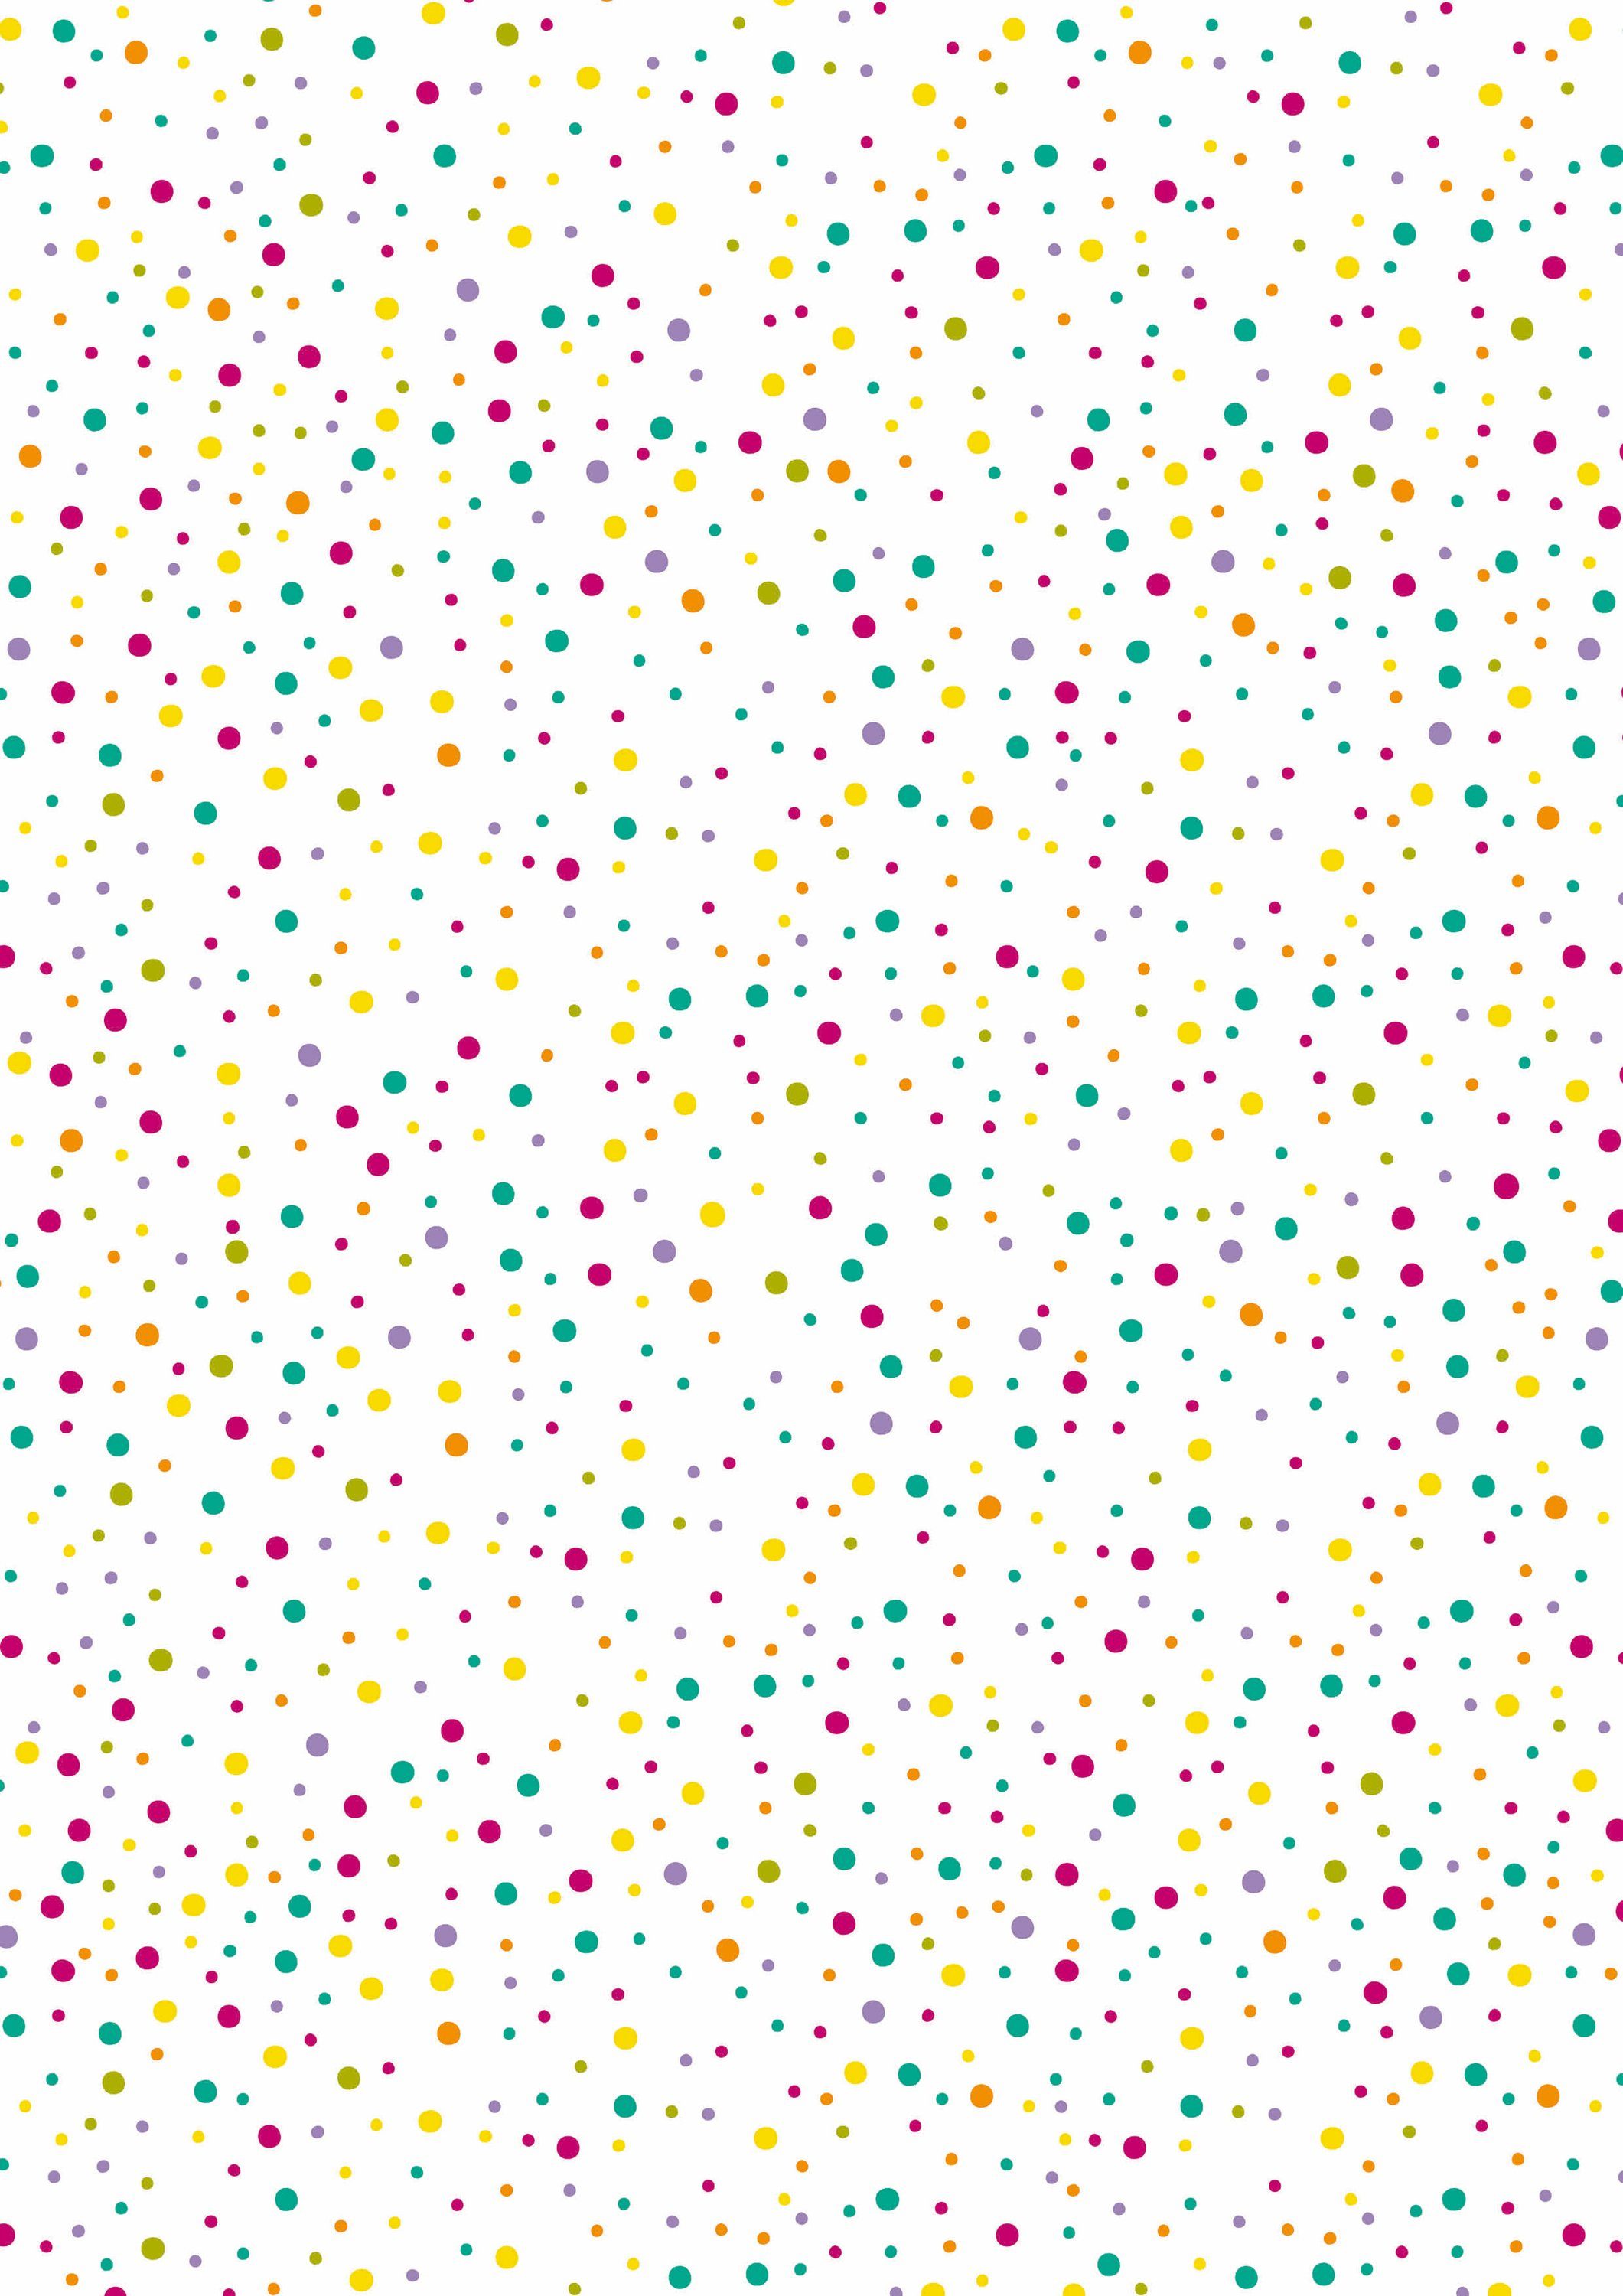 MarpaJansen Transparentpapier Regenbogen Punkte, 50 cm x 60 cm